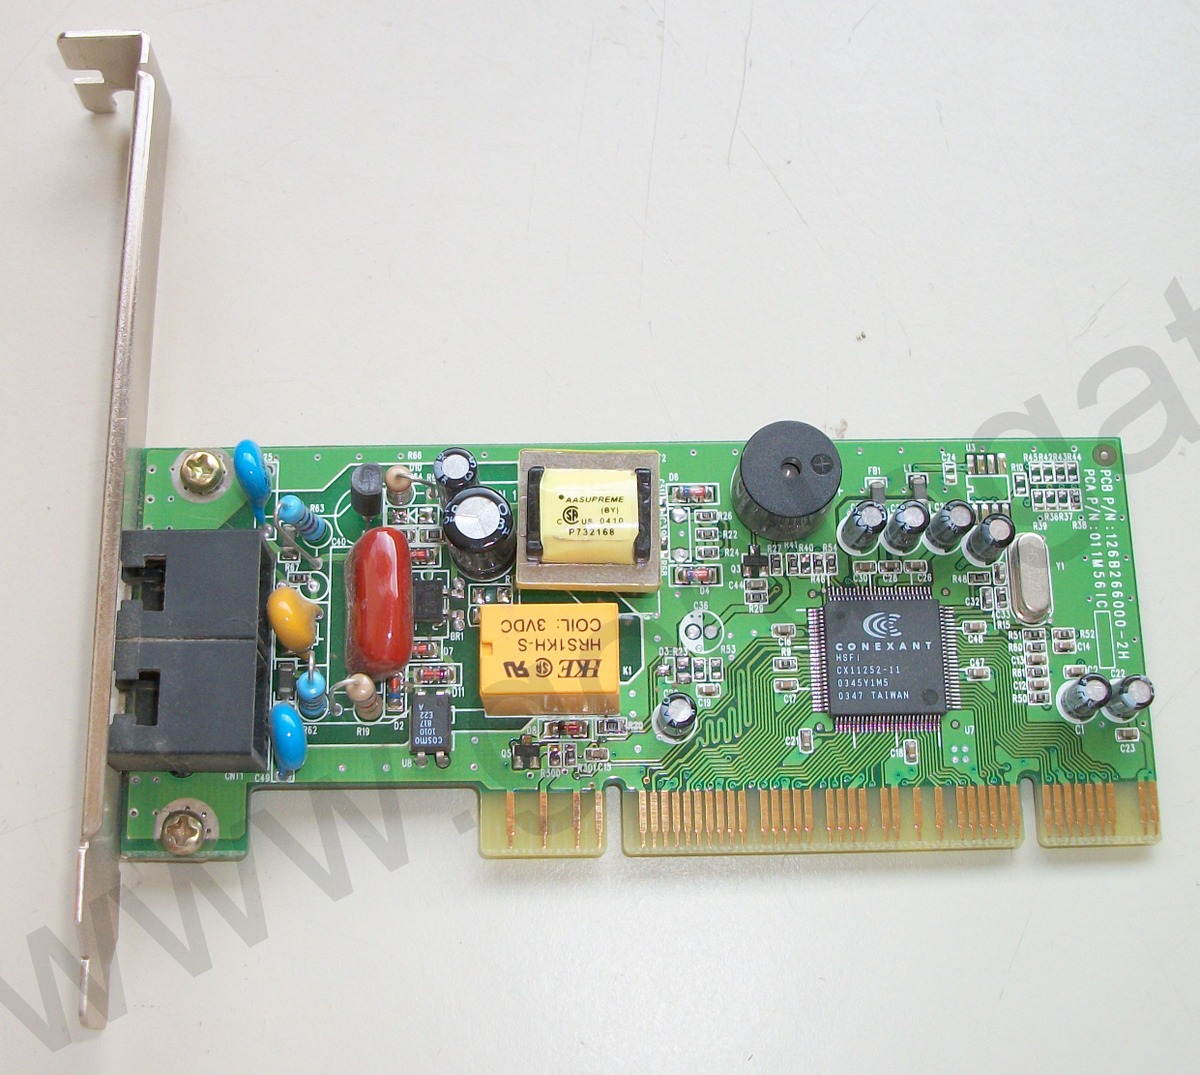 Archtek SmartLink 5634PRS 56K Internal PCI Modem